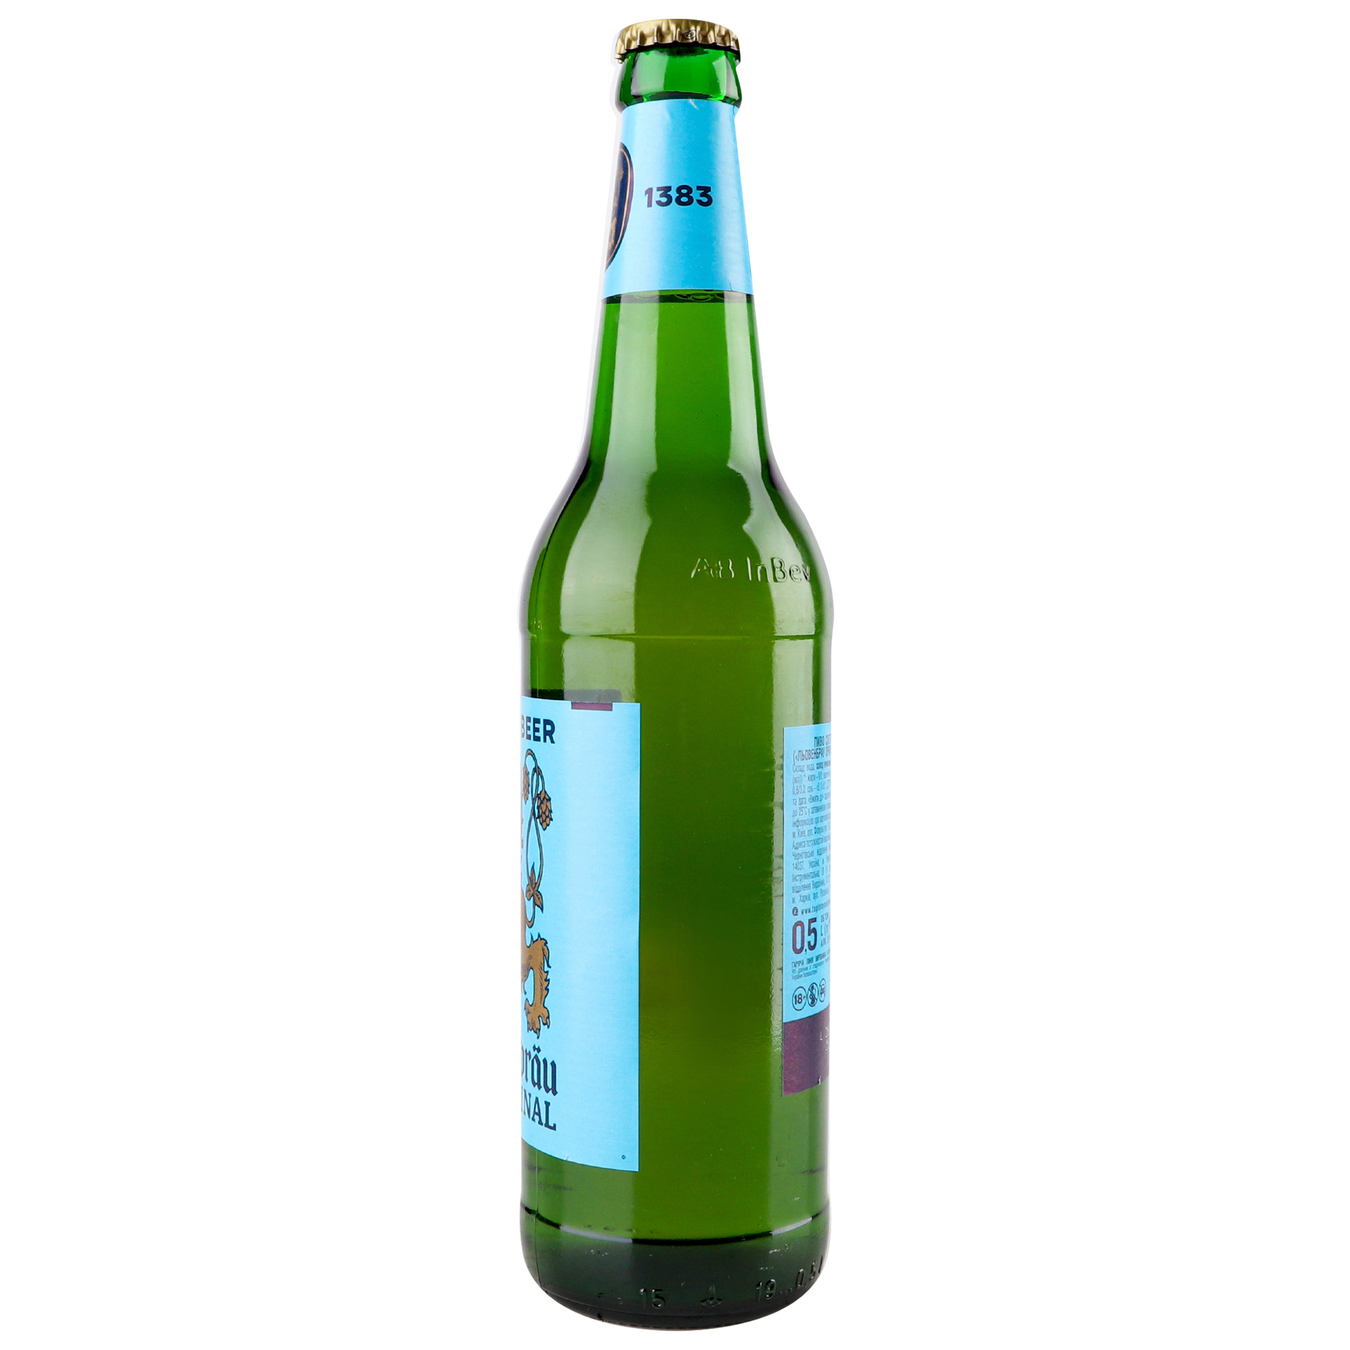 Beer Lowenbrau Original light pasteurized 5.1% 0.5l glass bottle 4